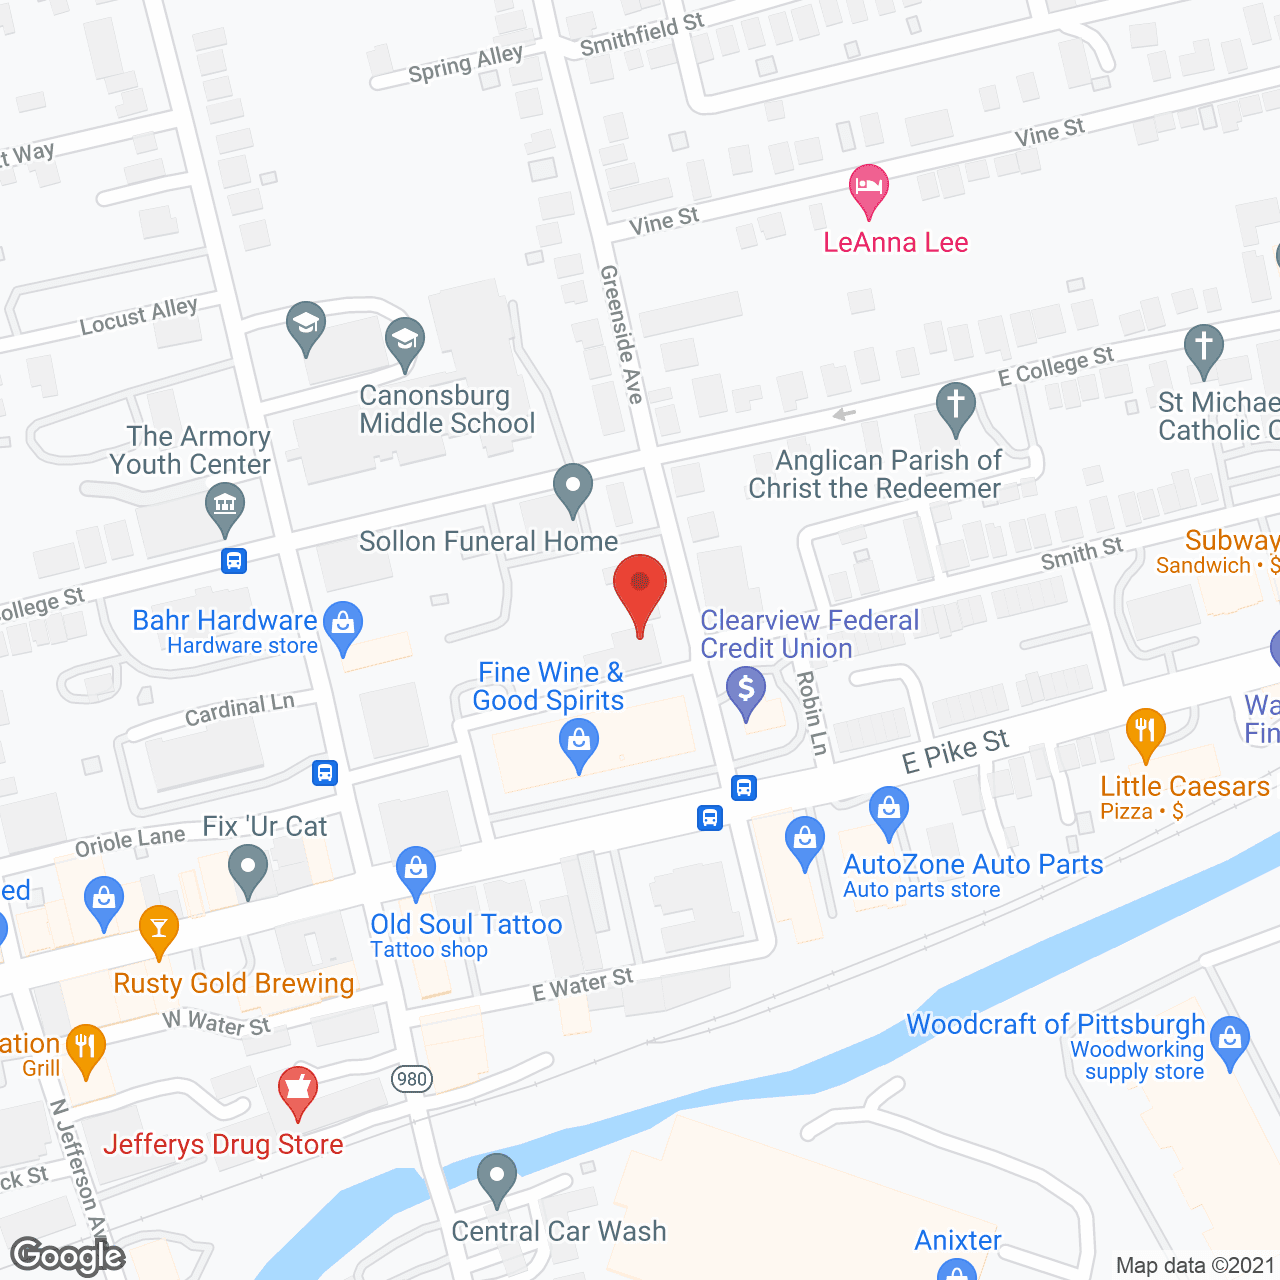 Greenside Meadows in google map